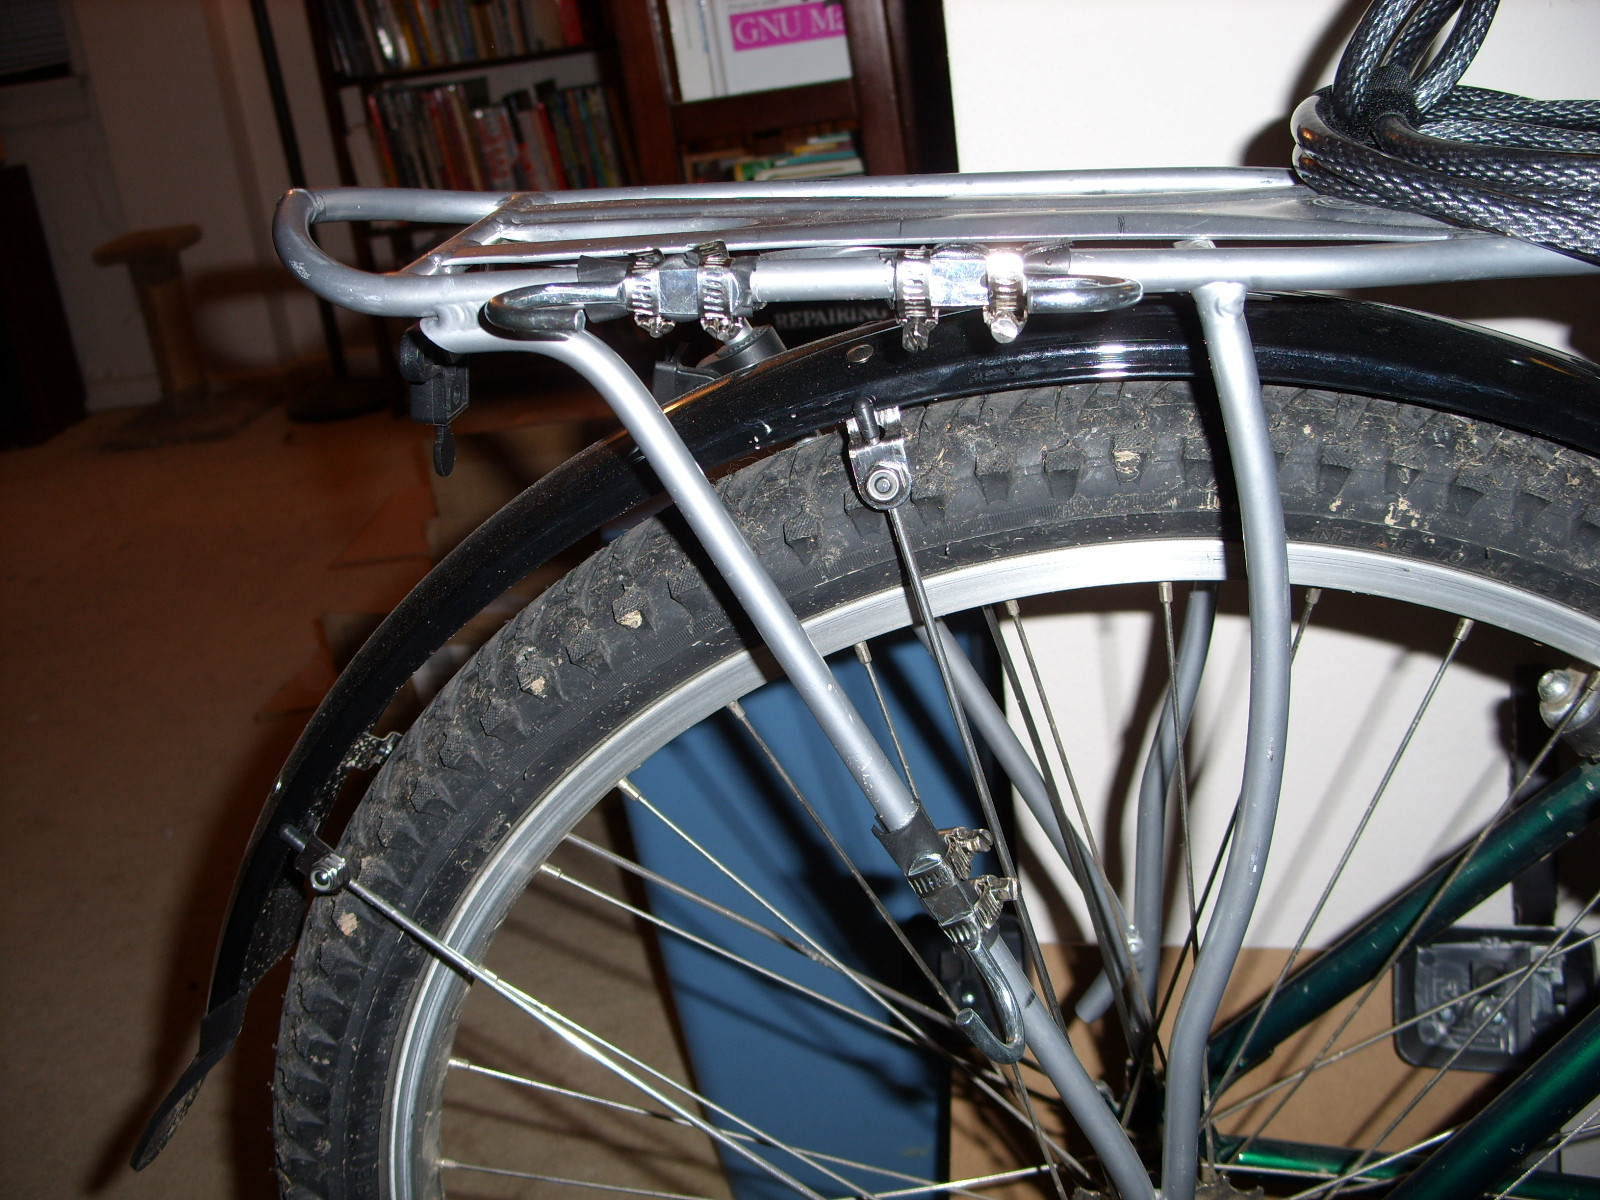 Best ideas about DIY Bike Rear Rack
. Save or Pin My DIY Bicycle Frame or Rear Rack Mounted U Lock Holder Now.